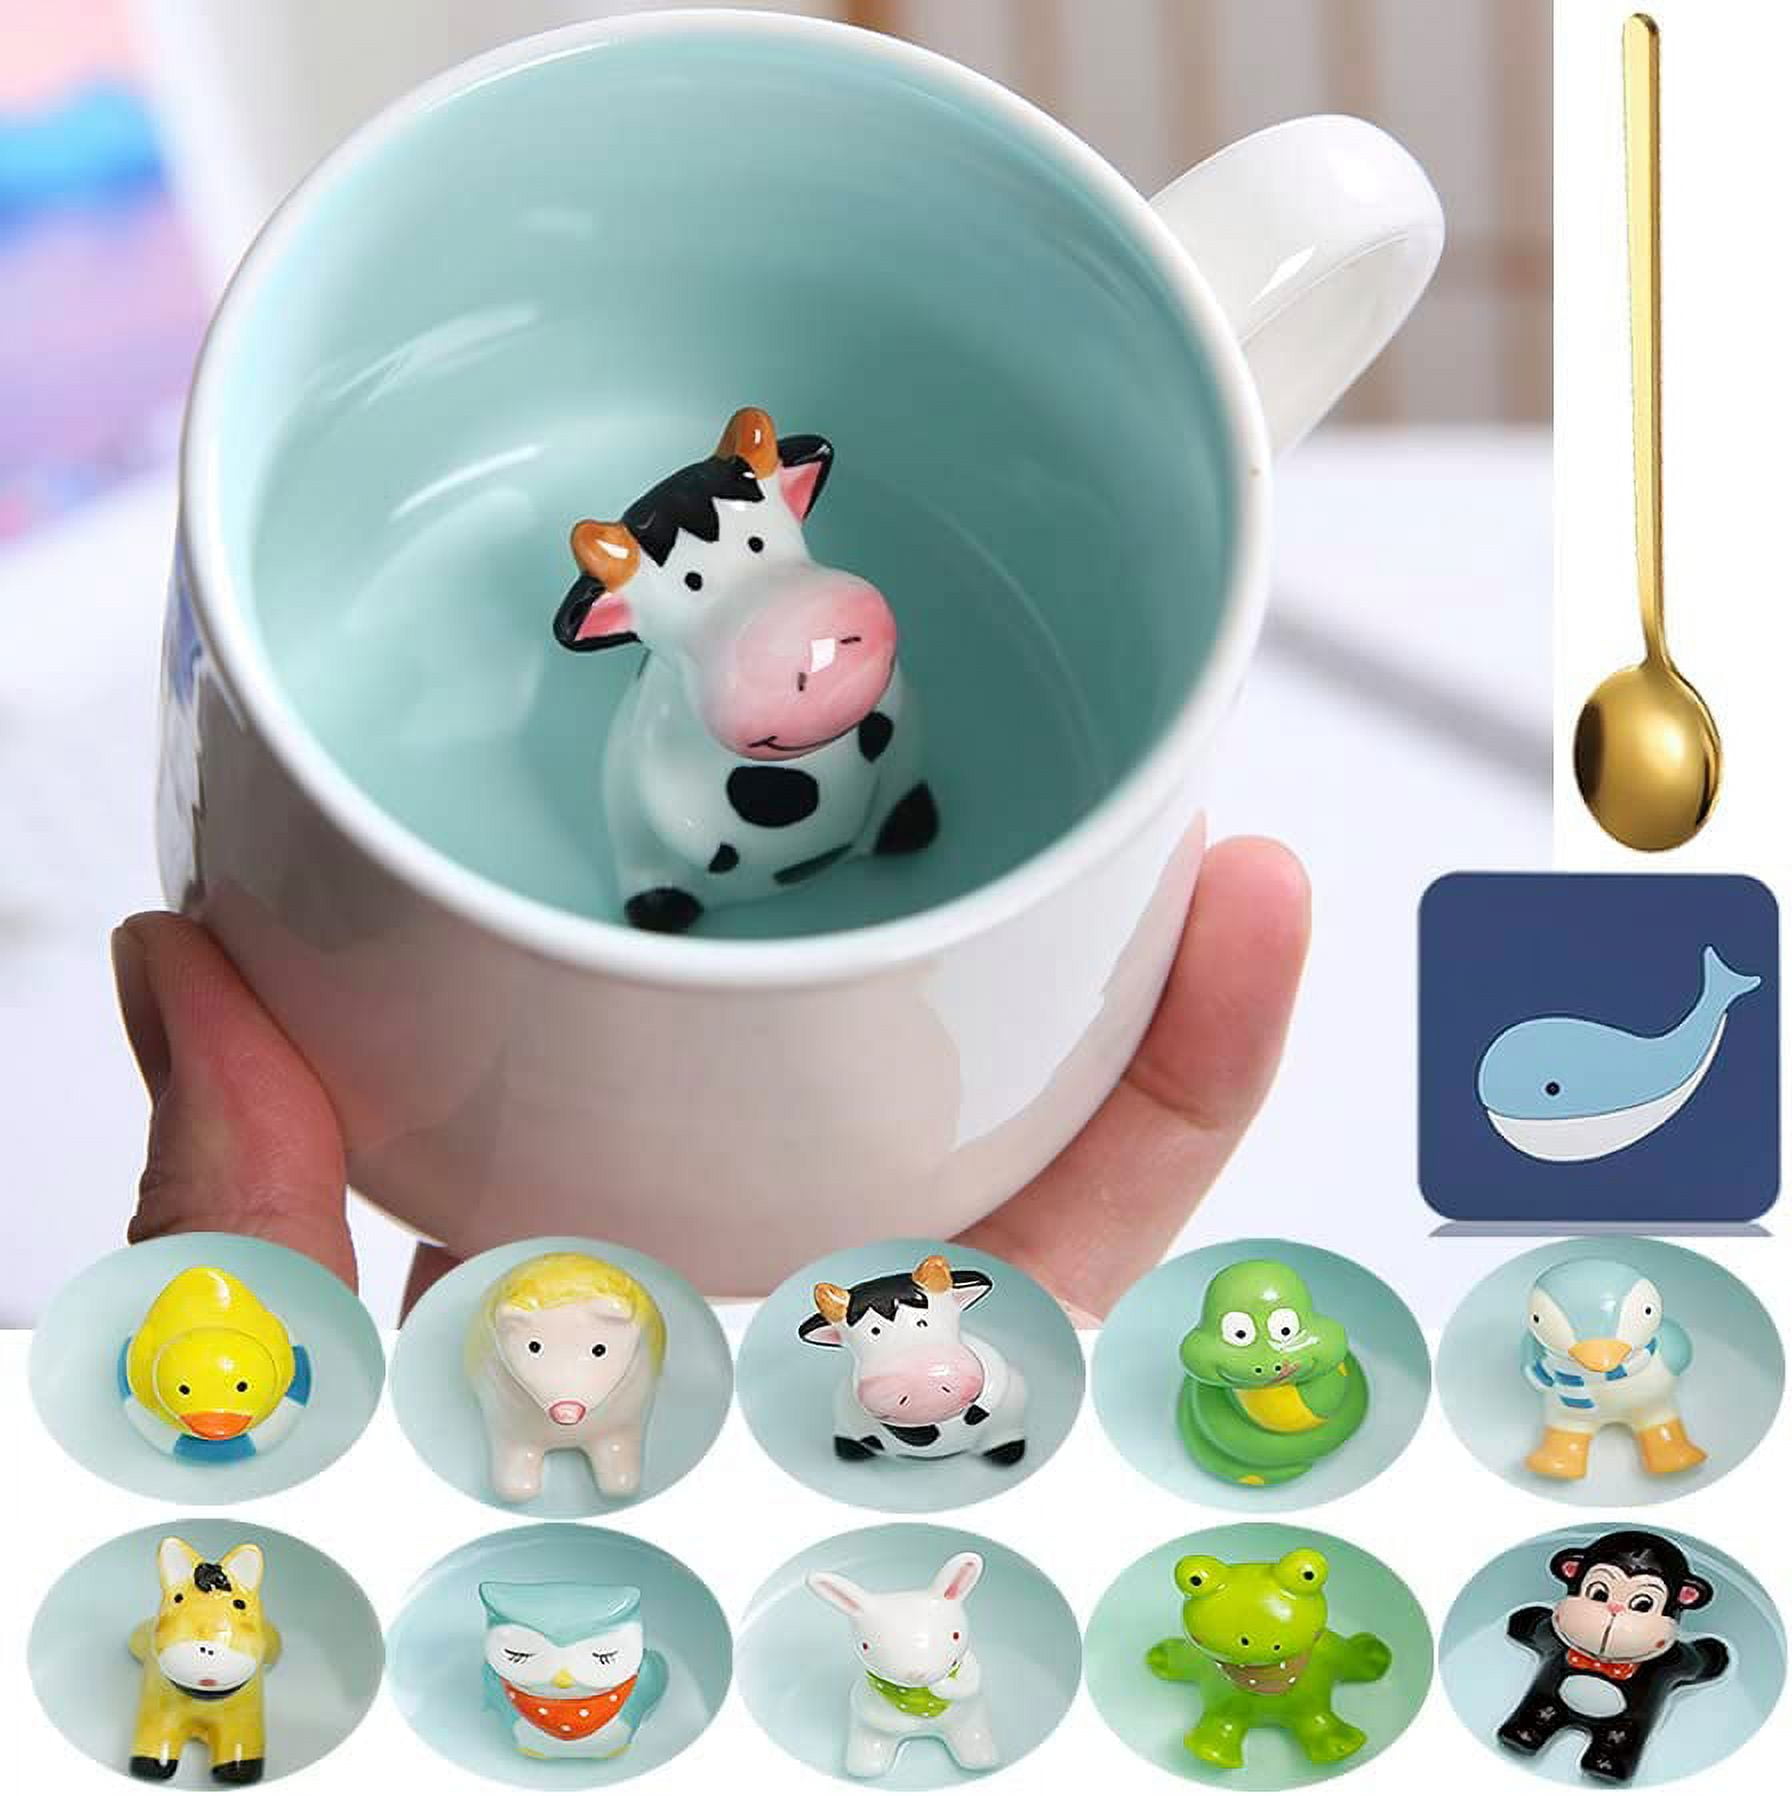 Cute Ceramic Coffee Mug Tea Cup Hidden 3D Cow With Spoon Lid Stuff Funny  Cool Christmas